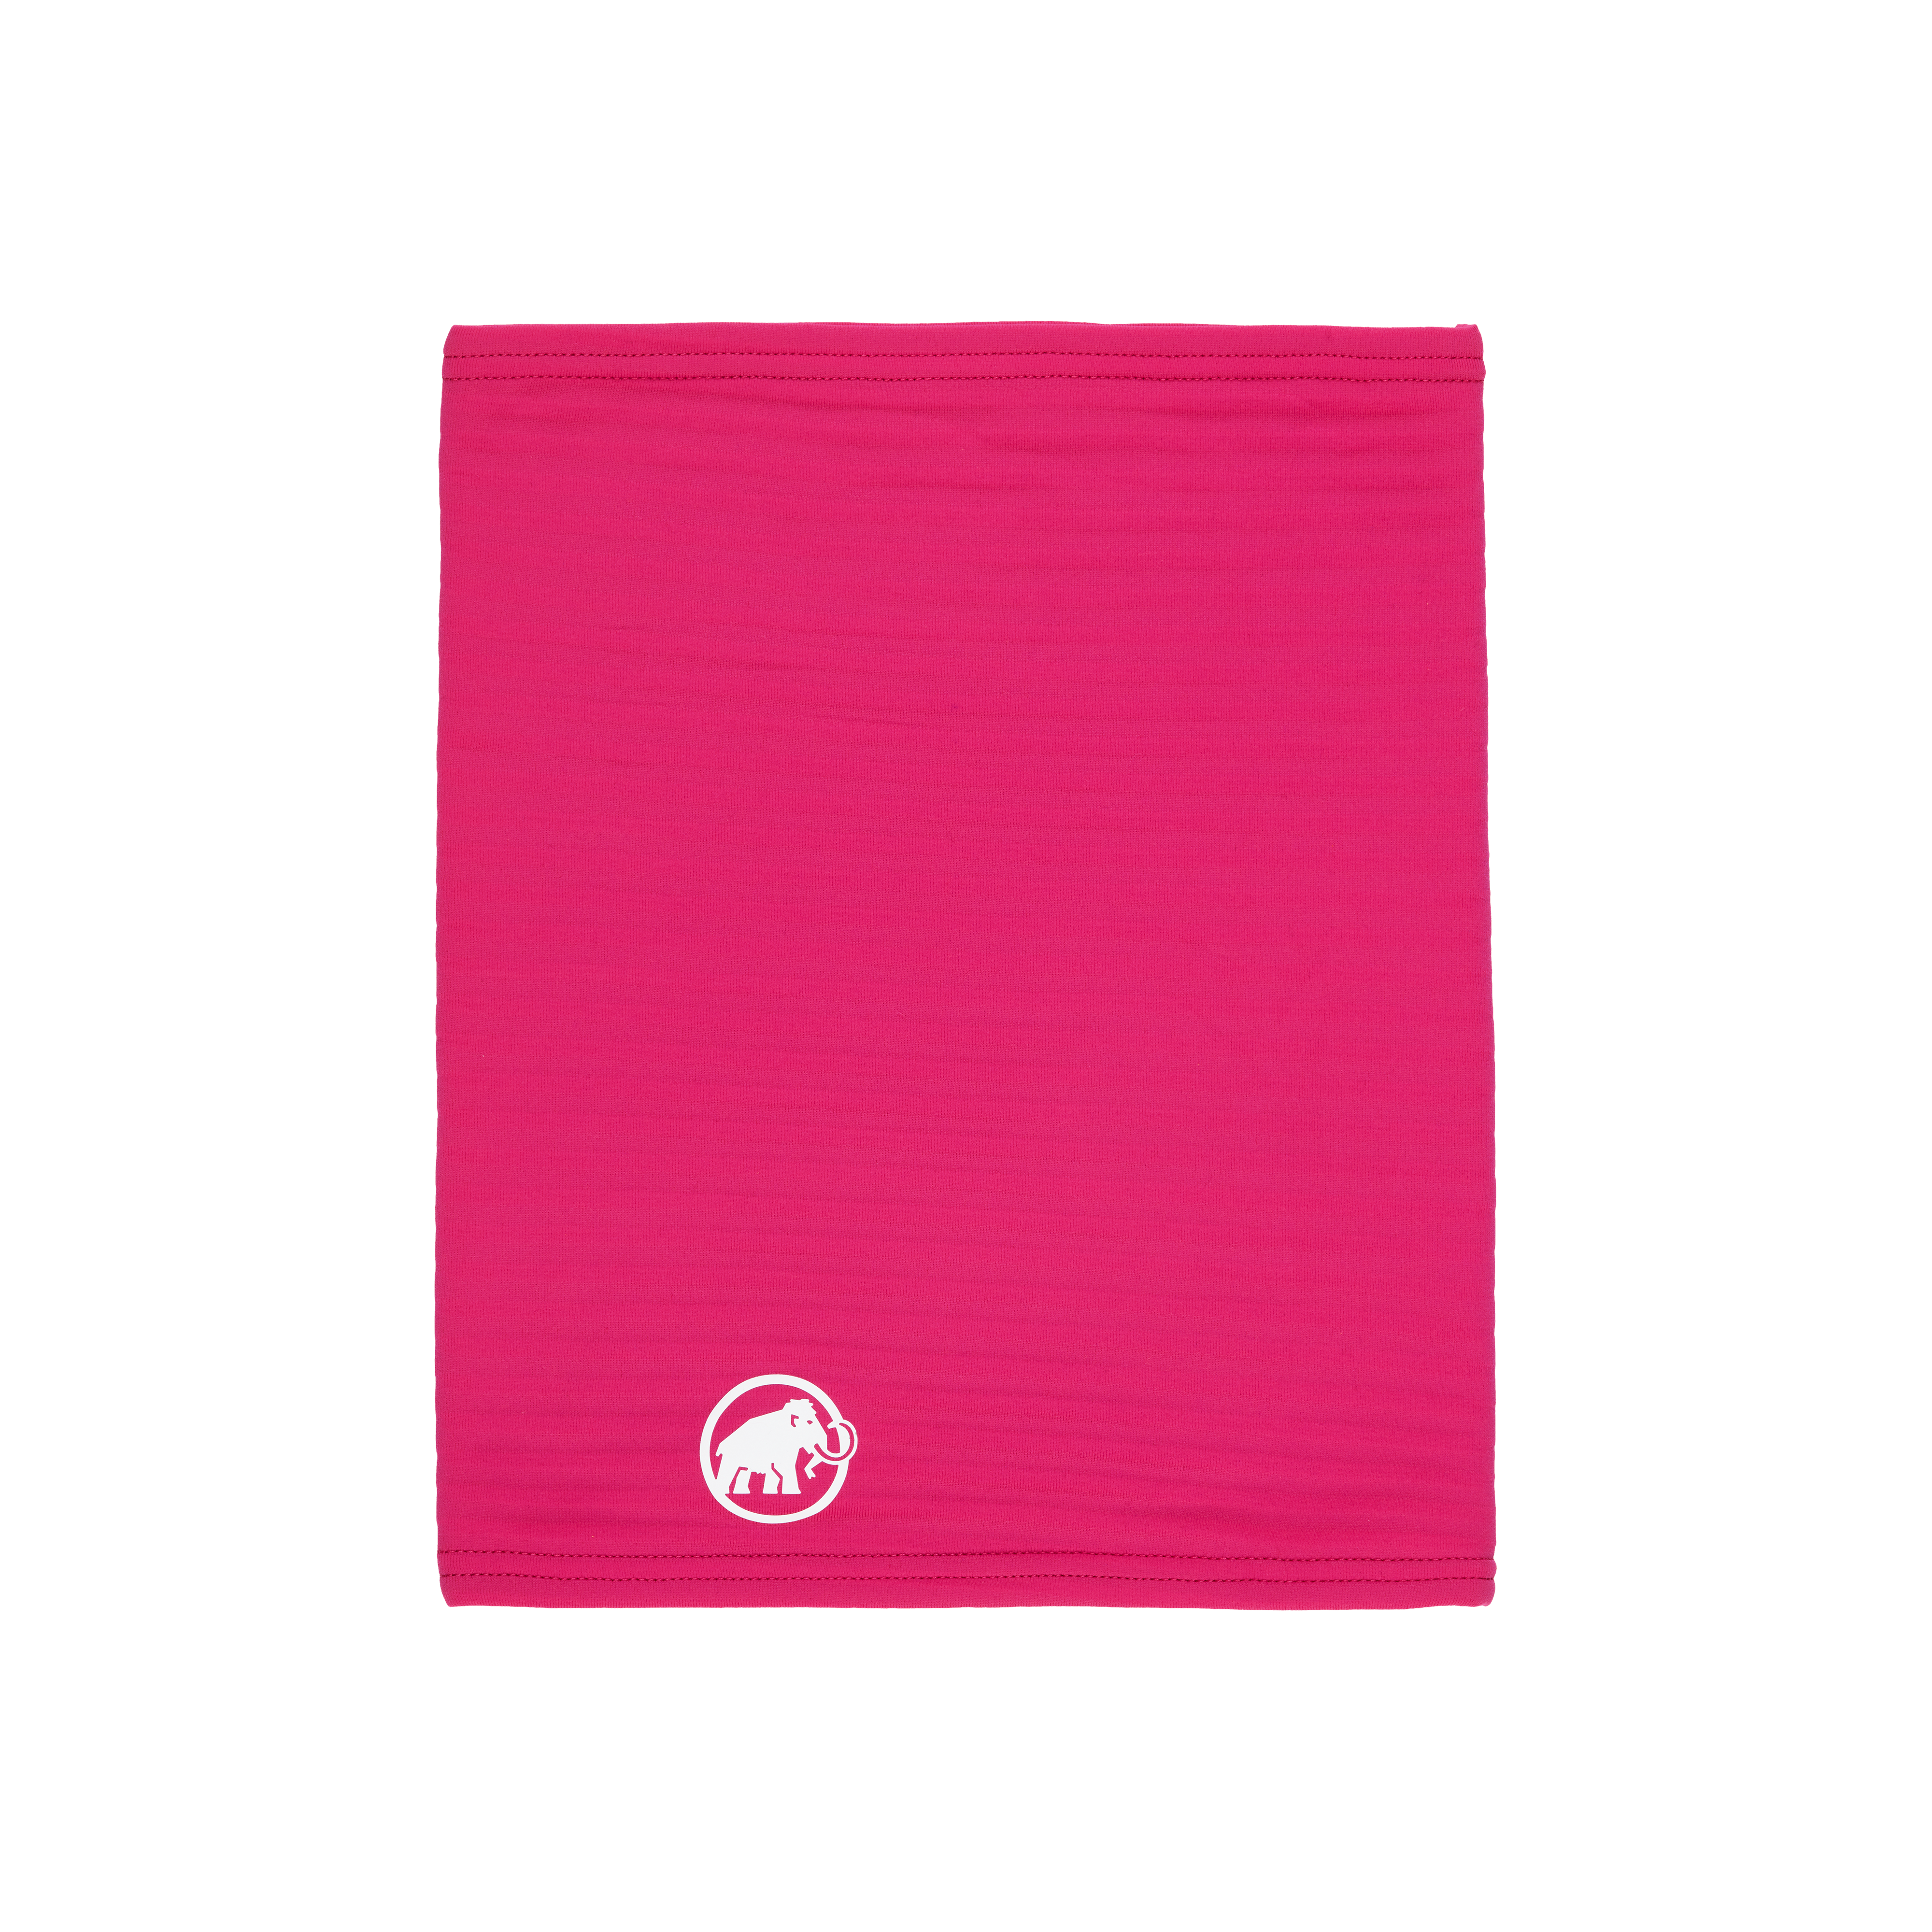 Taiss Light Neck Gaiter - pink, one size thumbnail